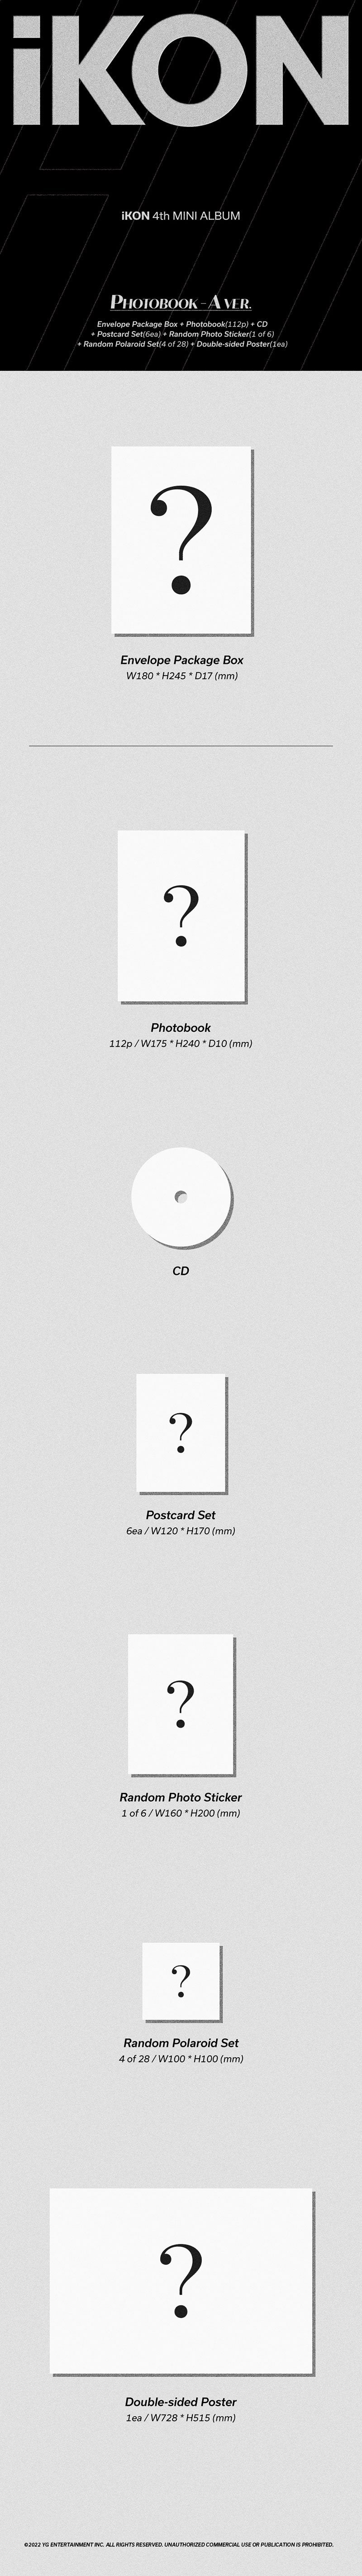 iKON - FLASHBACK (الألبوم الرابع المصغر) Photobook Ver. أ